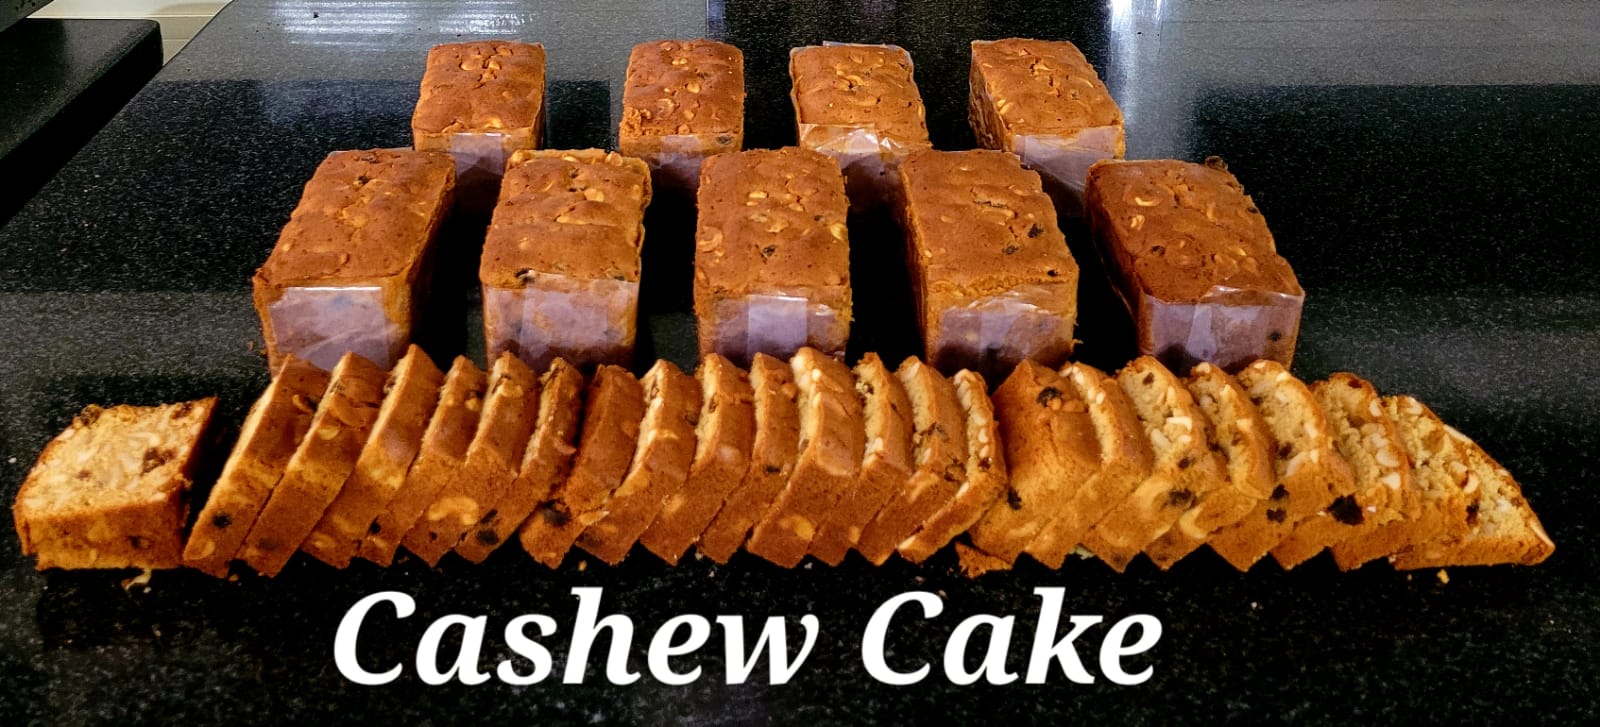 Cashew Cake